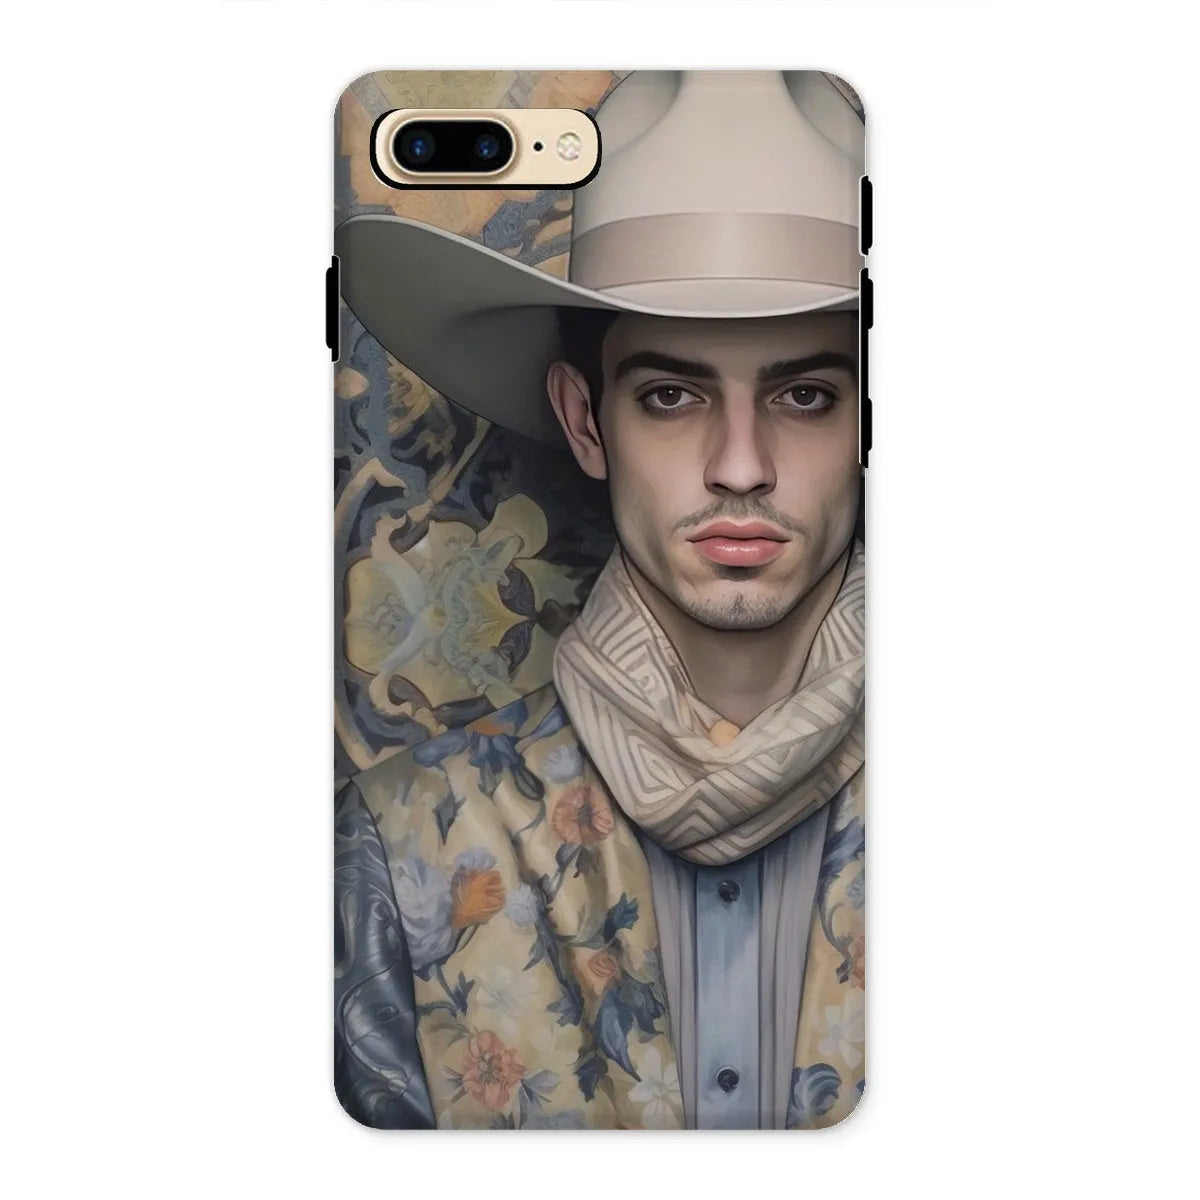 Farzad The Gay Cowboy - Dandy Gay Men Art Phone Case - Iphone 8 Plus / Matte - Mobile Phone Cases - Aesthetic Art